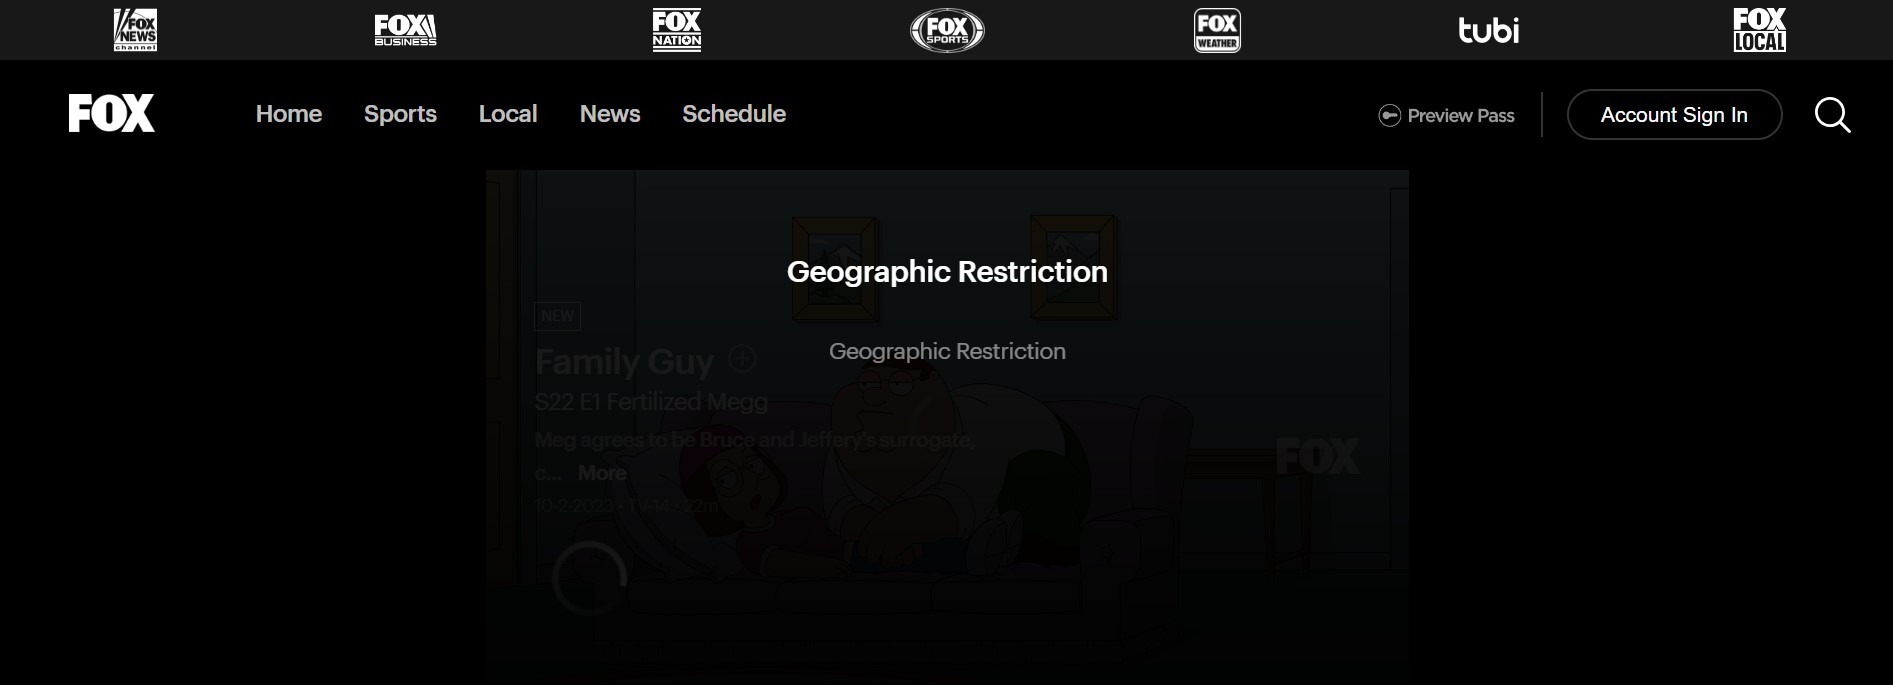 Family Guy Season 22 outside the USA - Fox Geo-Restriction Error